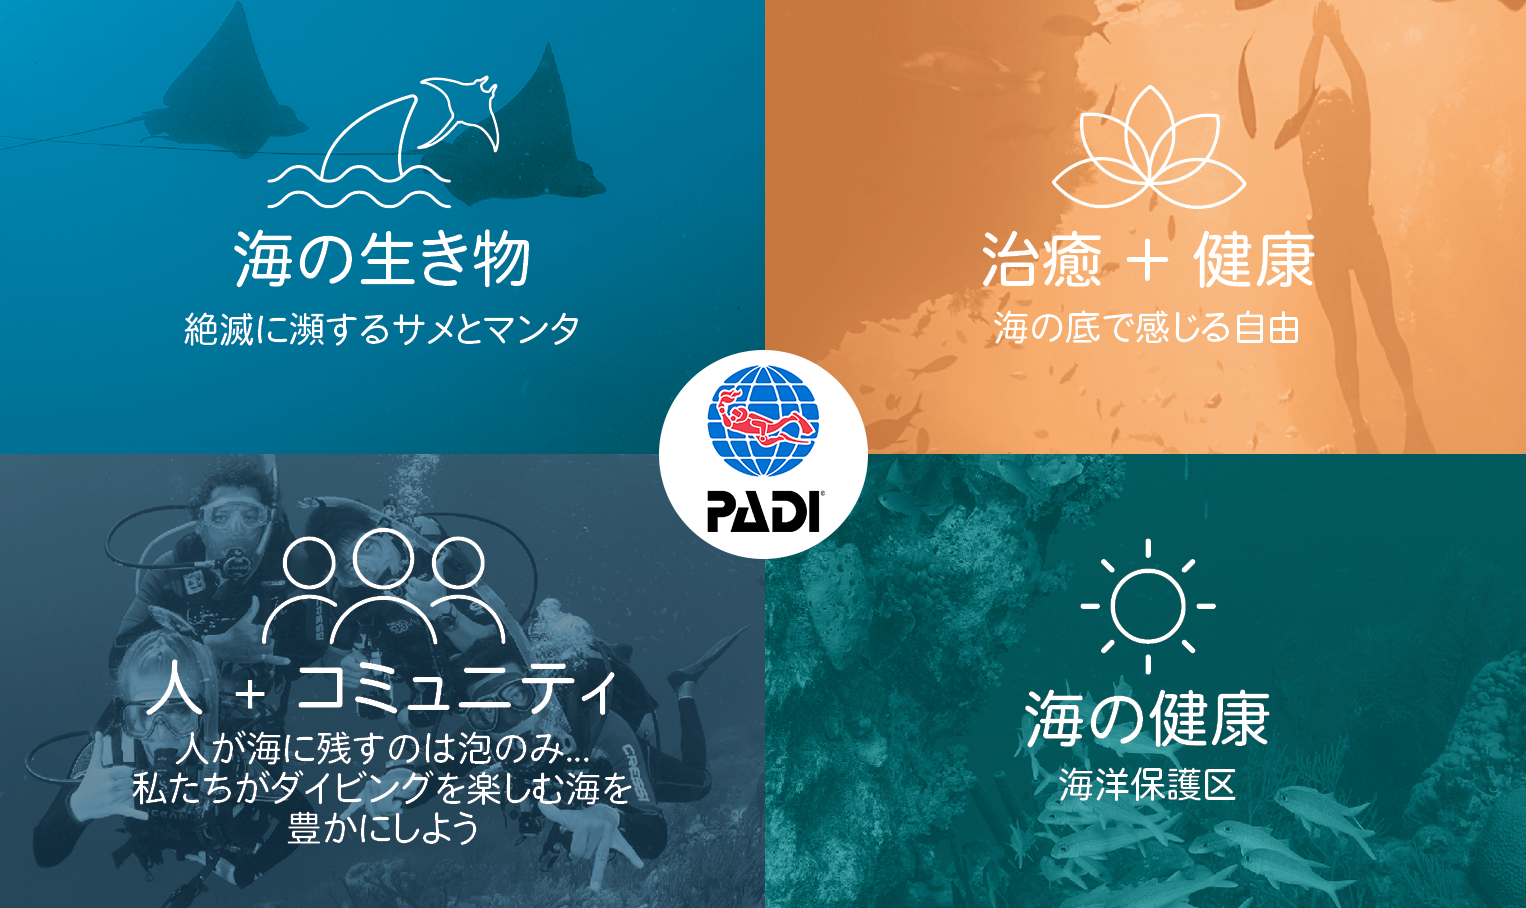 Four-Pillars-of-Change-Japanese